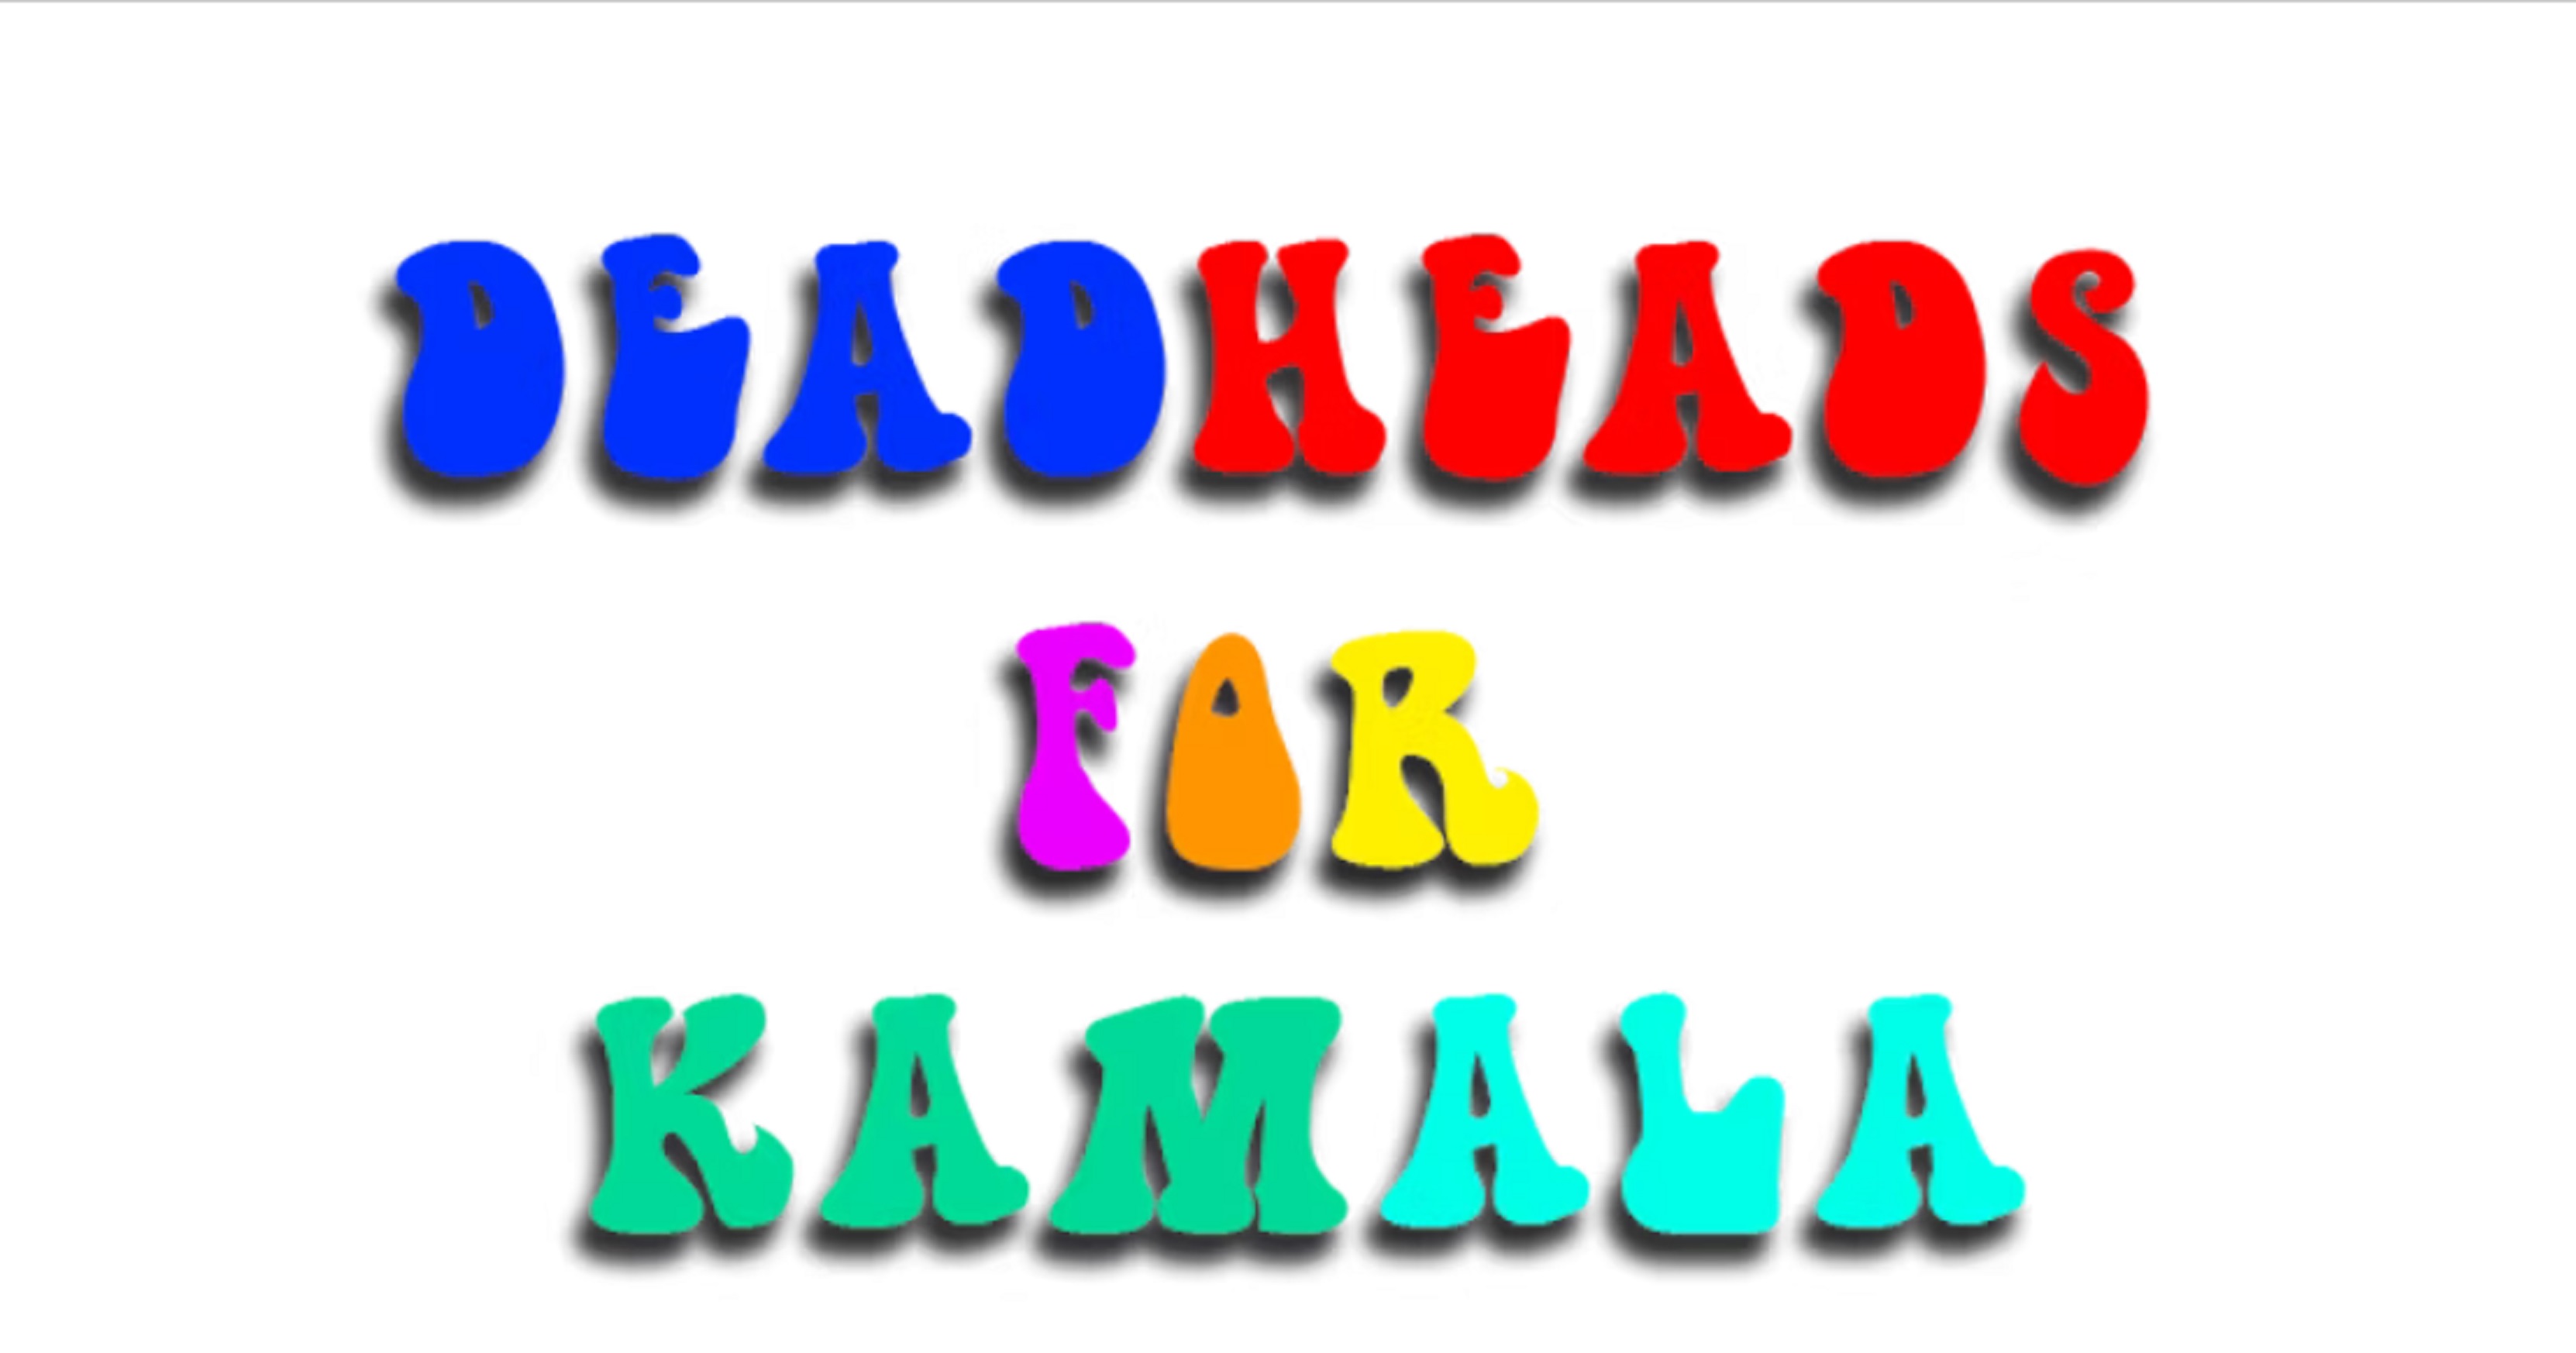 Deadheads for Kamala - A Virtual Event Celebrating Jerry Garcia and Supporting Kamala Harris